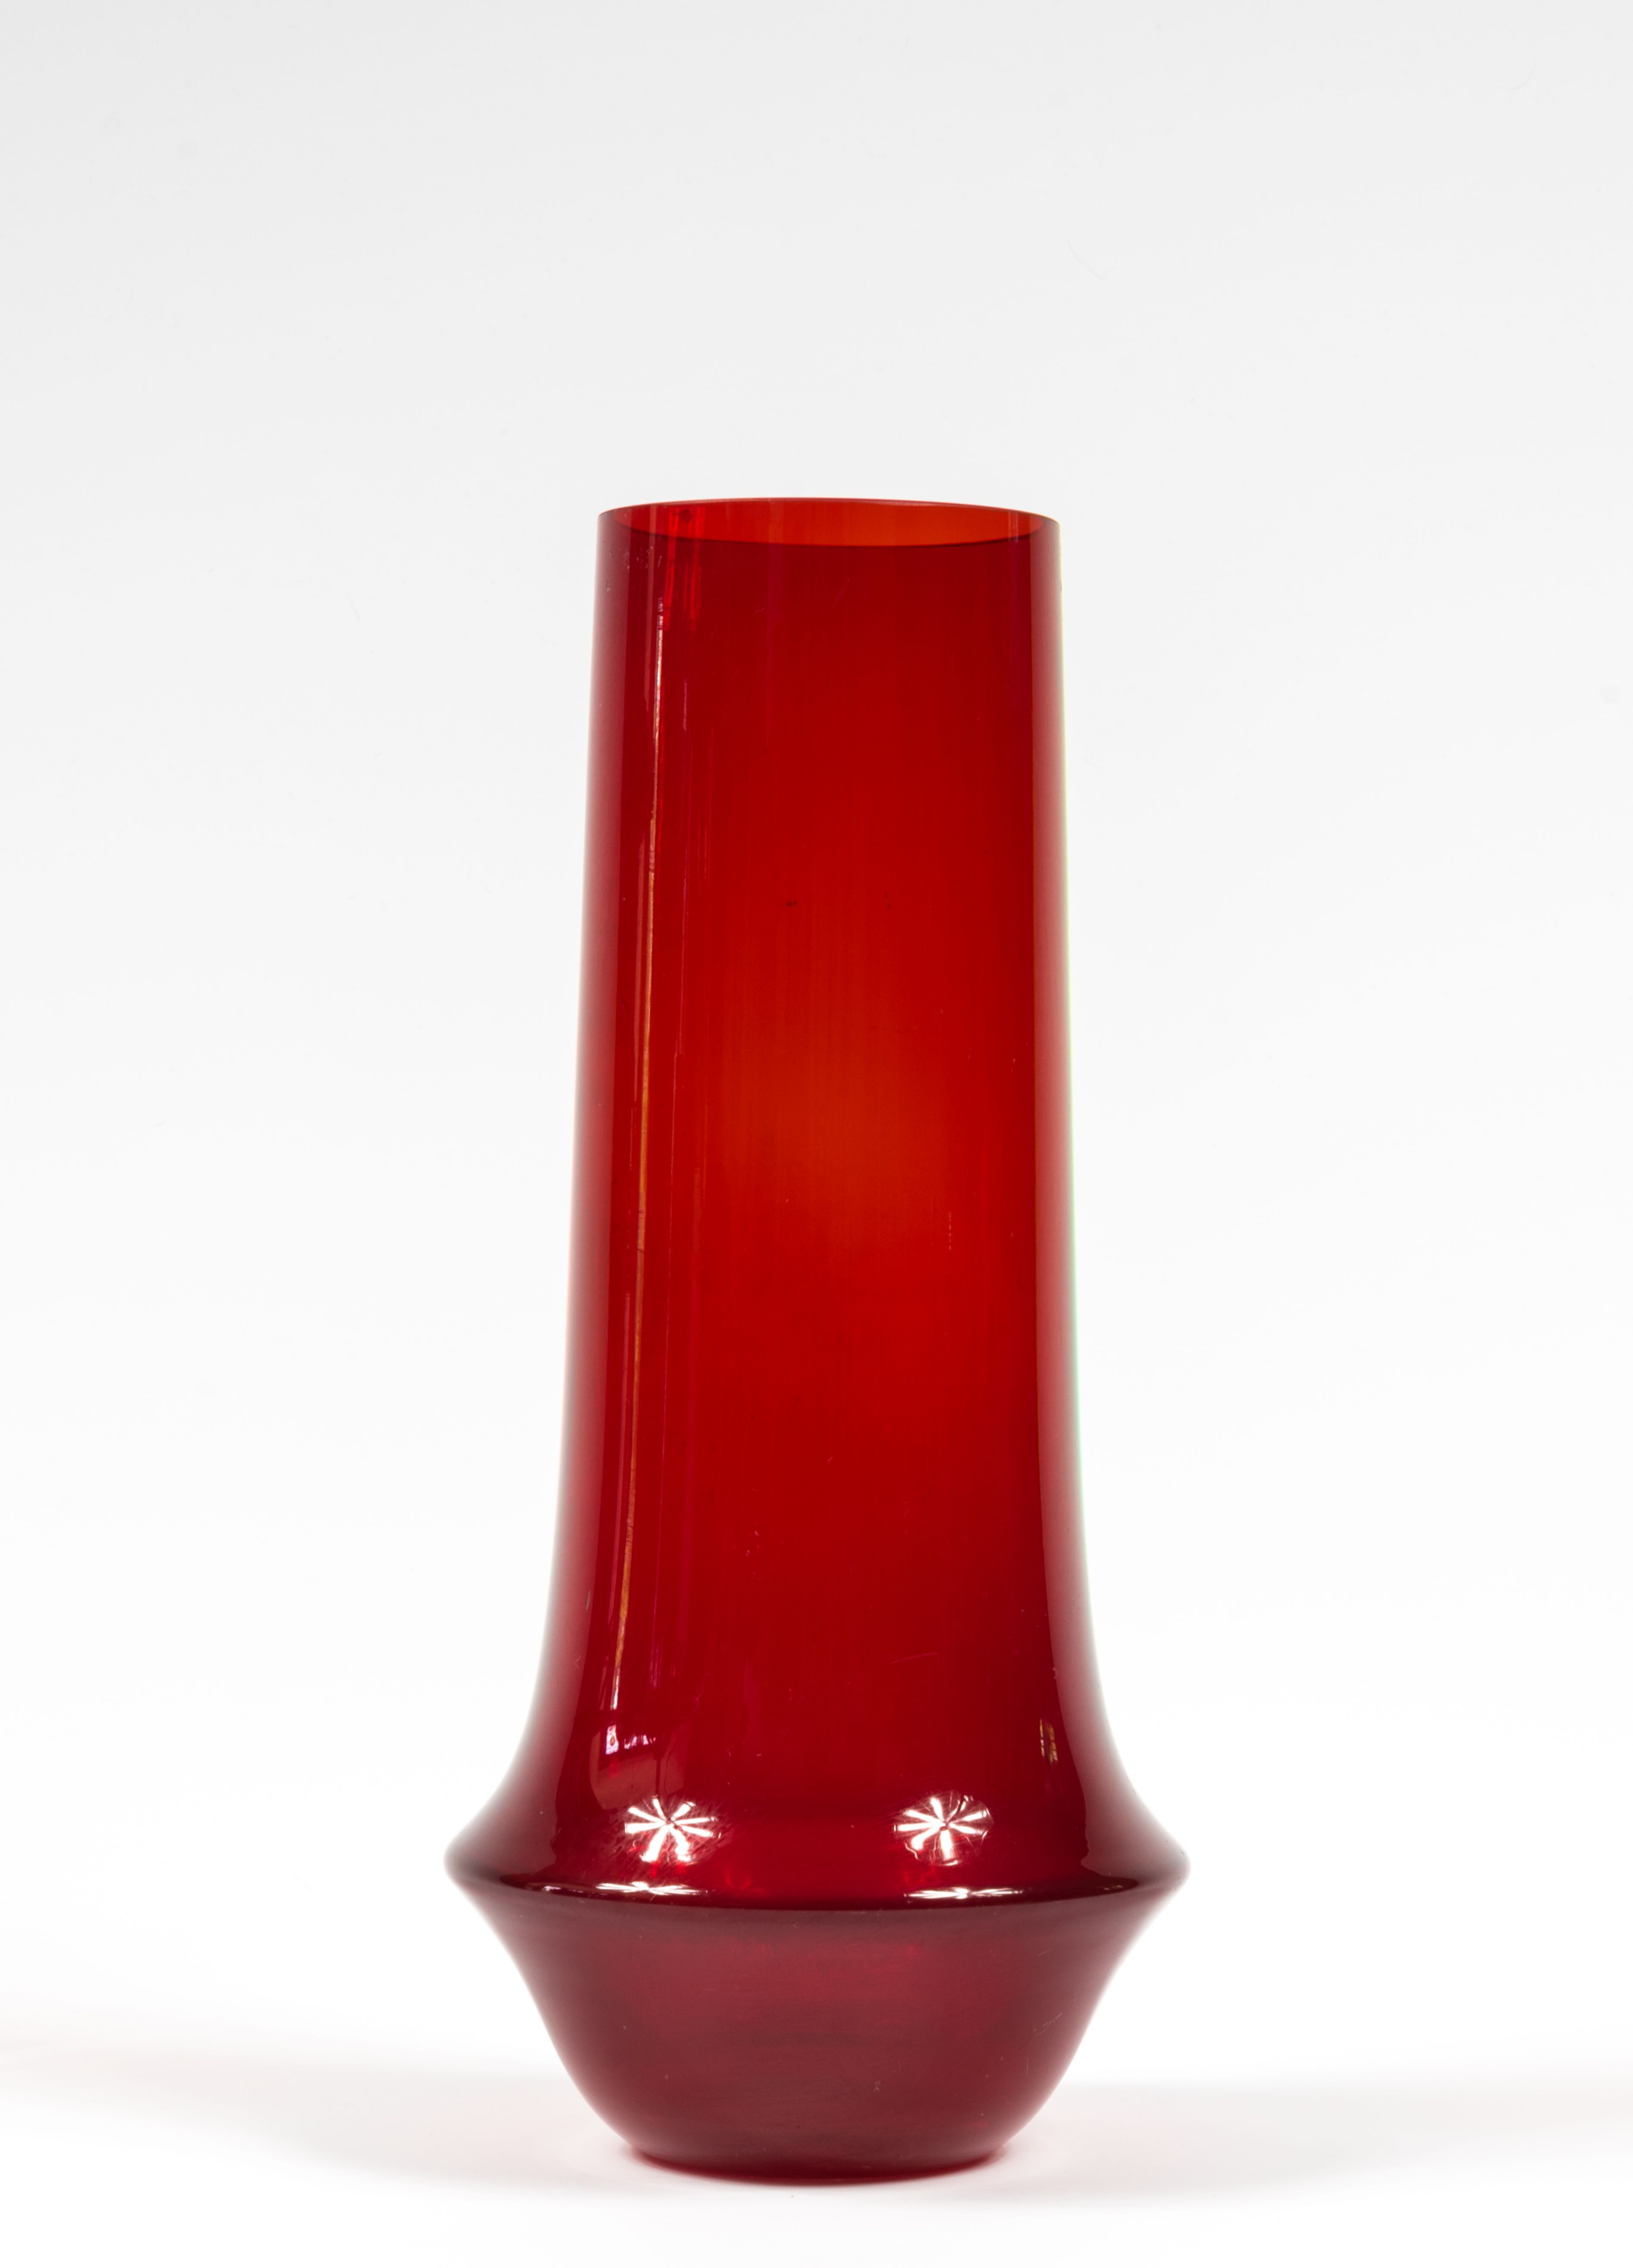 4 foot glass cylinder vases of riihima¤en lasi oy riihimaki red glass vase by tamara aladin regarding large scandinavian red glass vase designed by tamara aladin c1963 for riihimaki riihimaen lasi oy